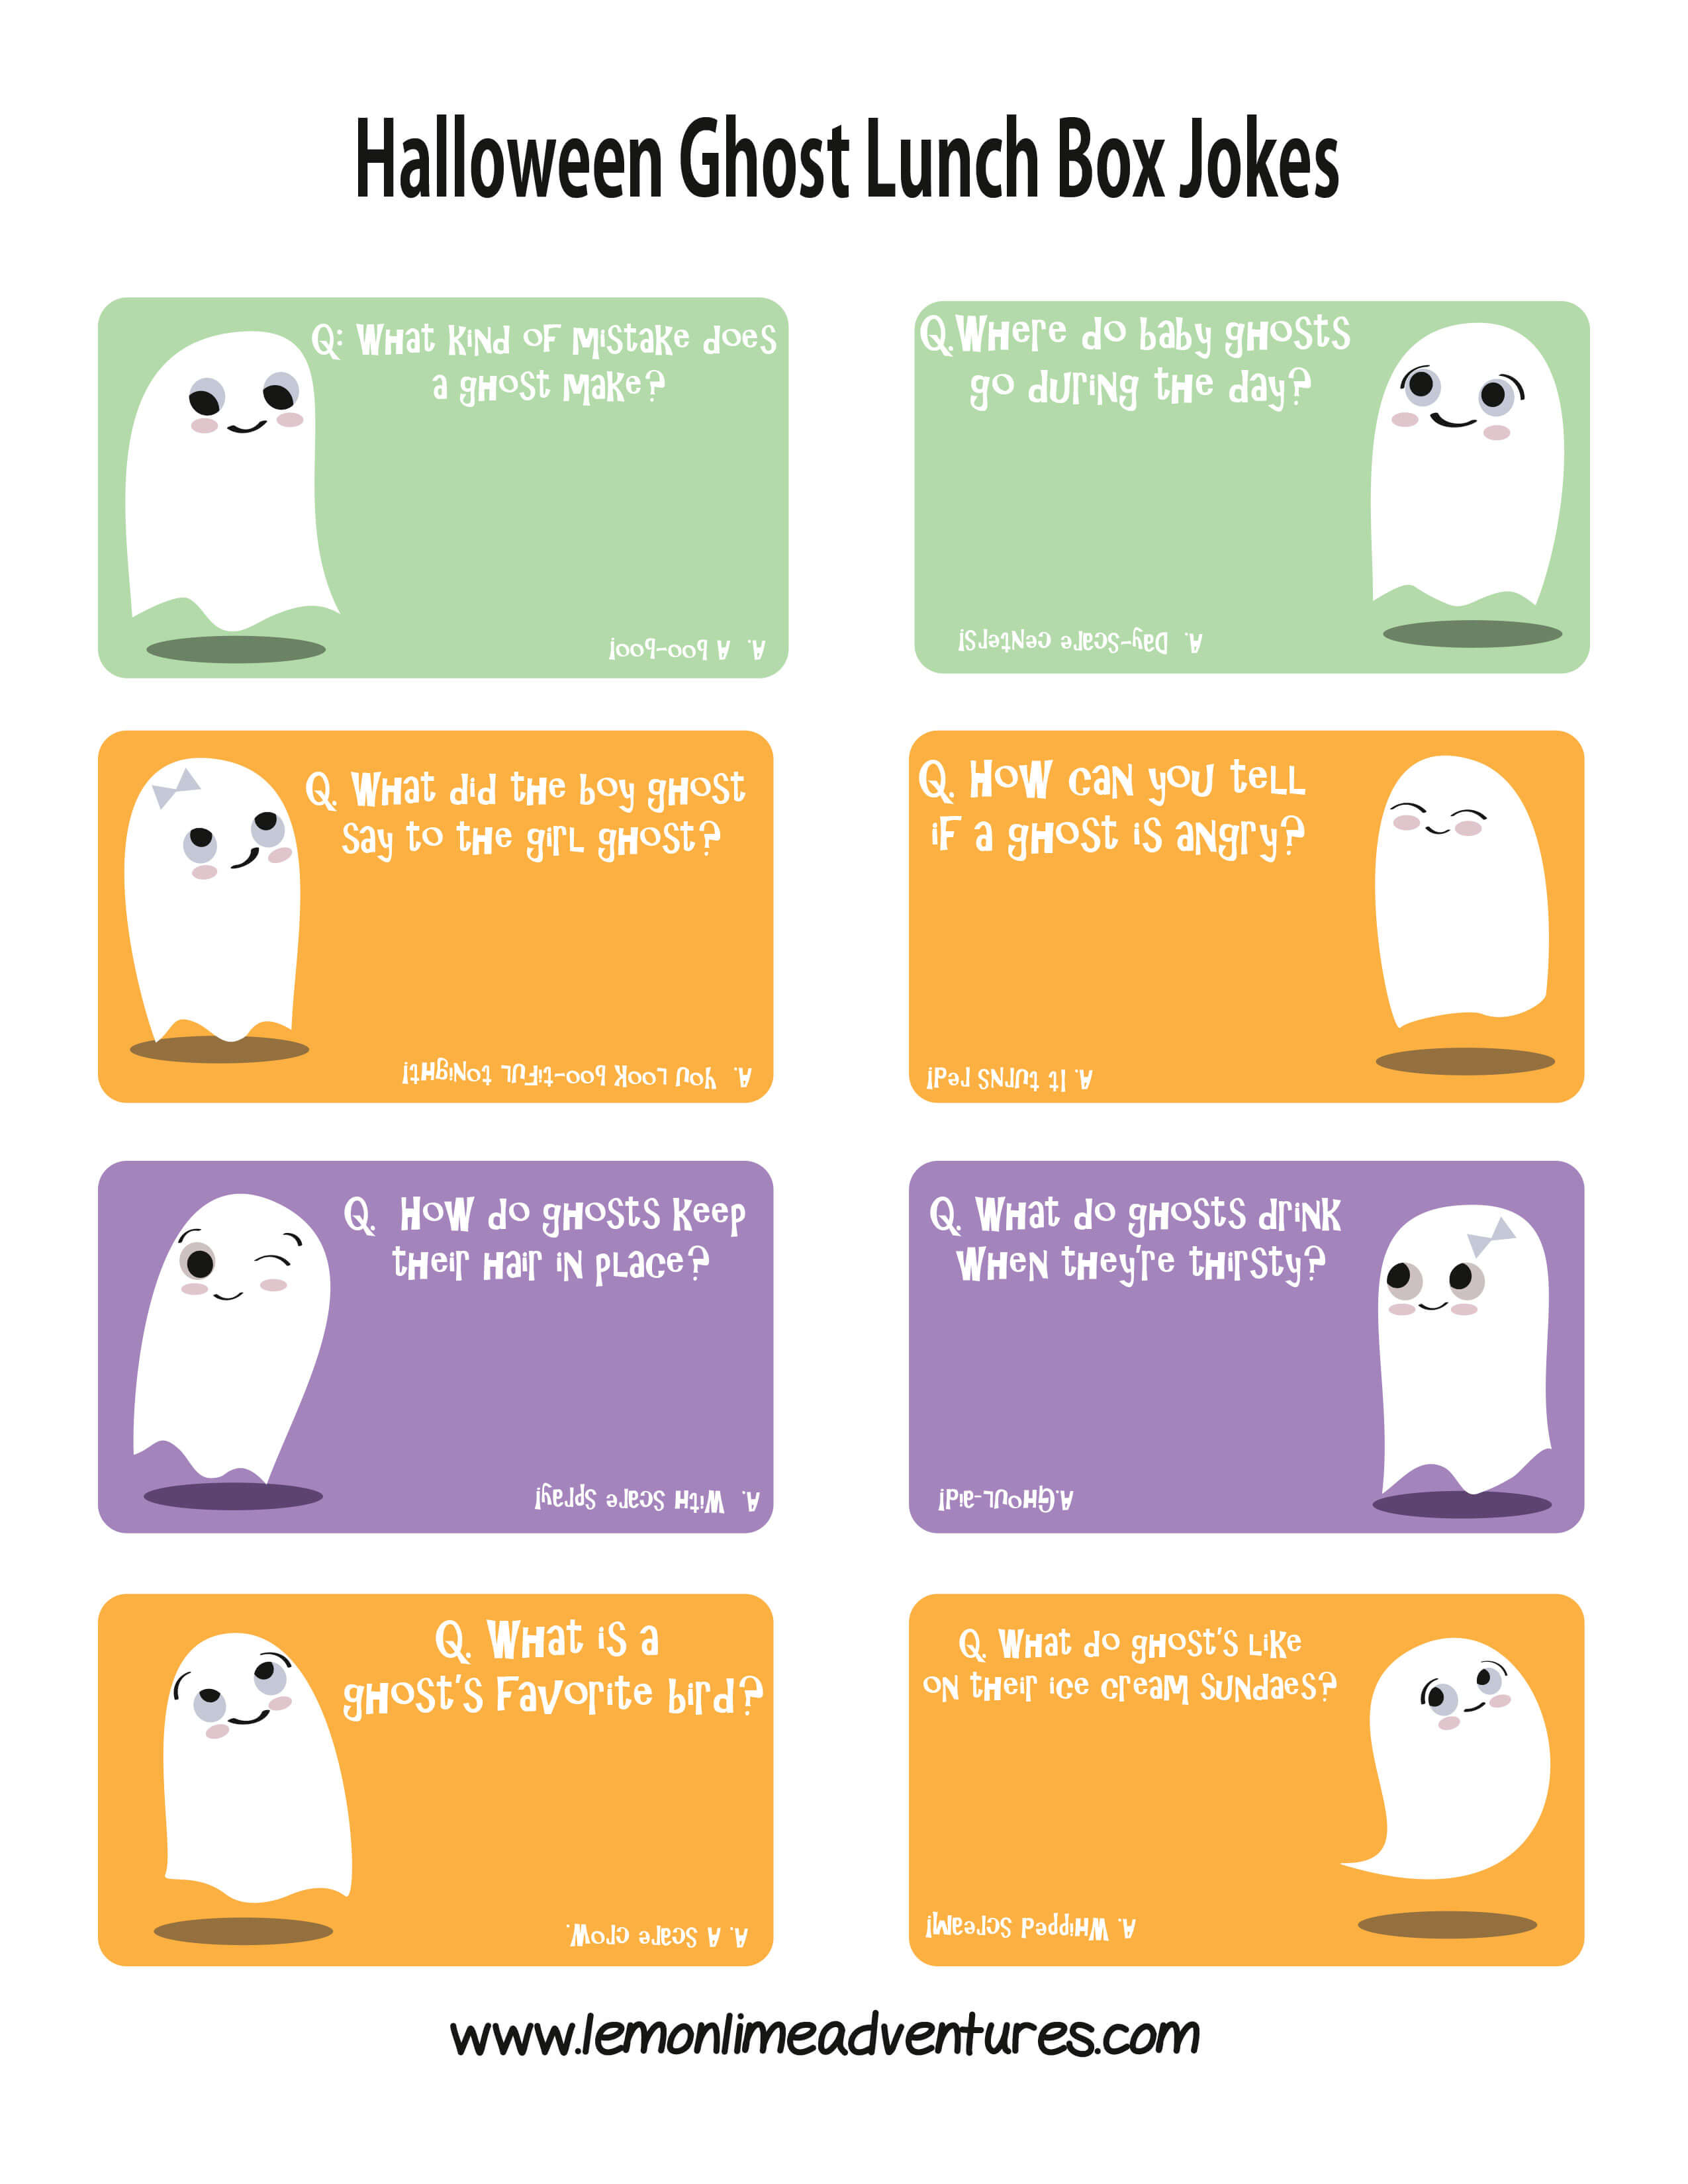 Halloween ghost joke lunch notes for kids!